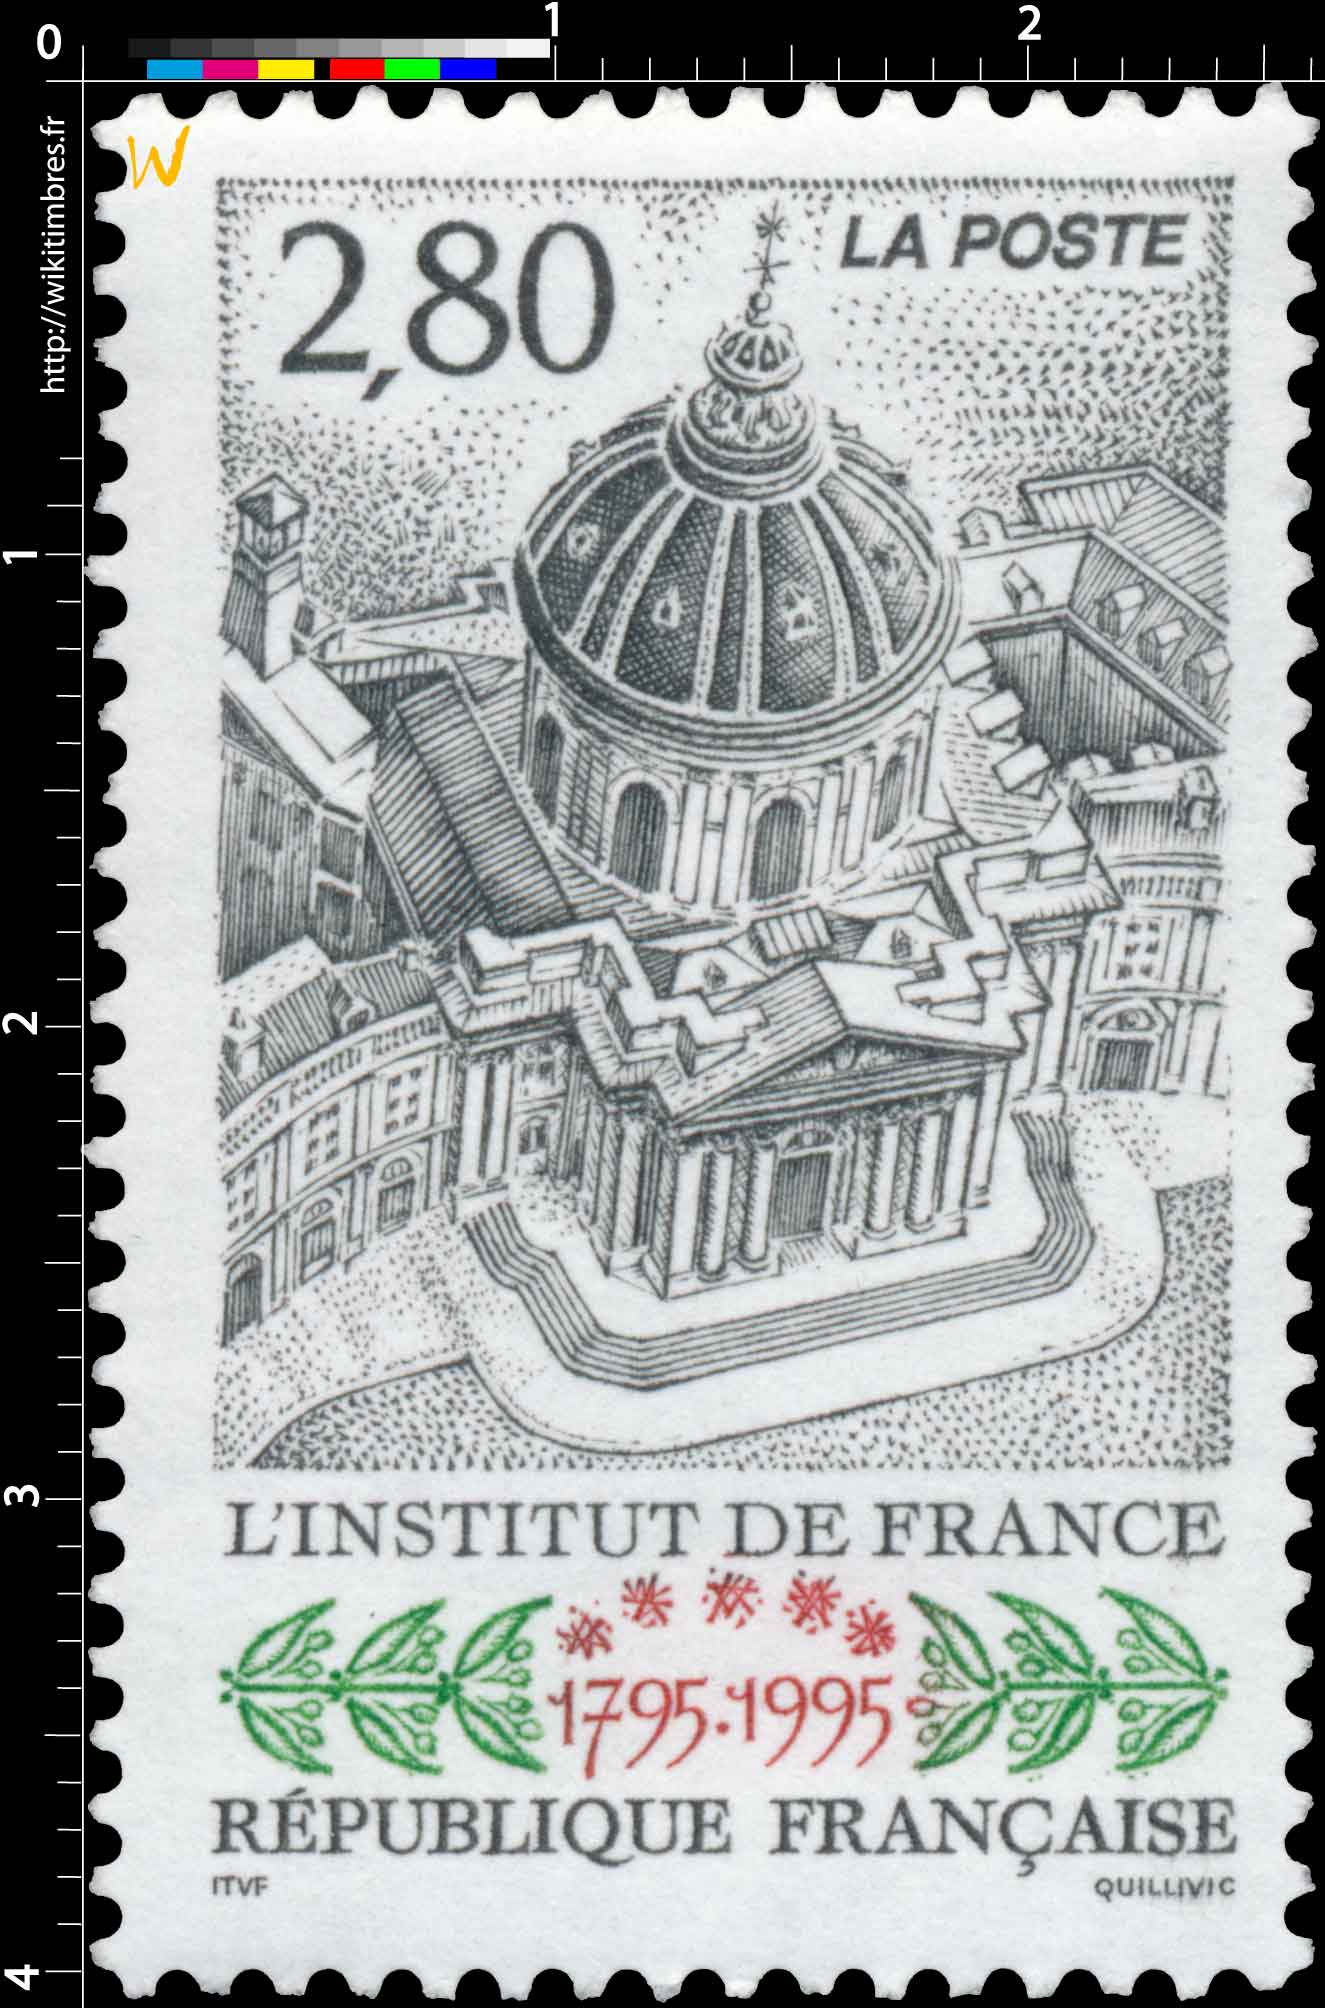 L'INSTITUT DE FRANCE 1795-1995